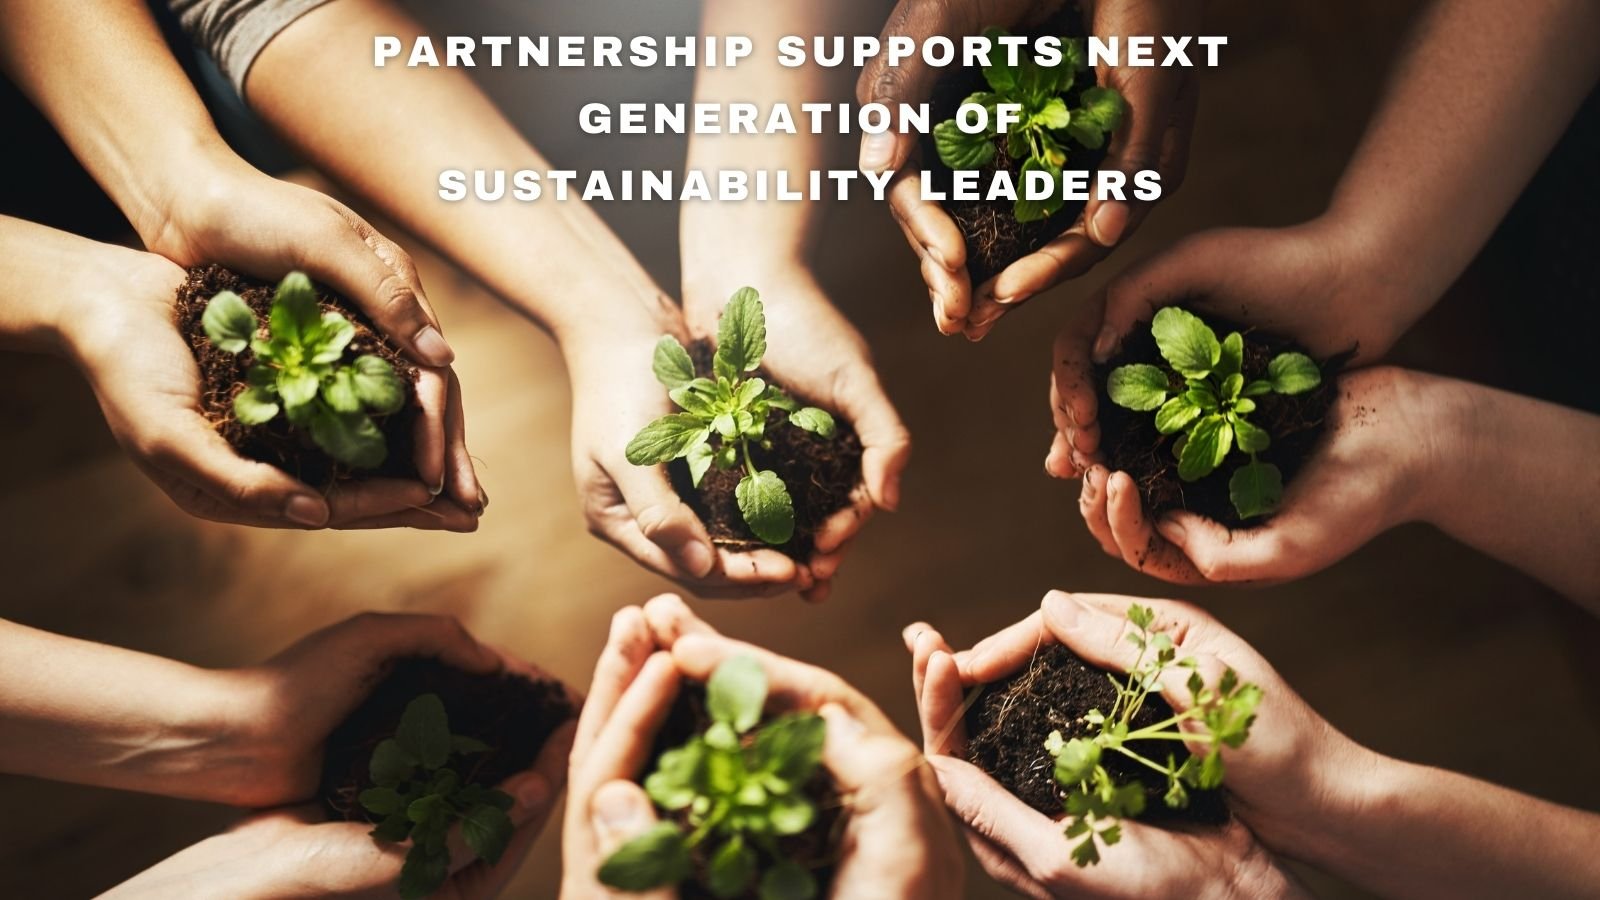 Partnership supports next generation of sustainability leaders